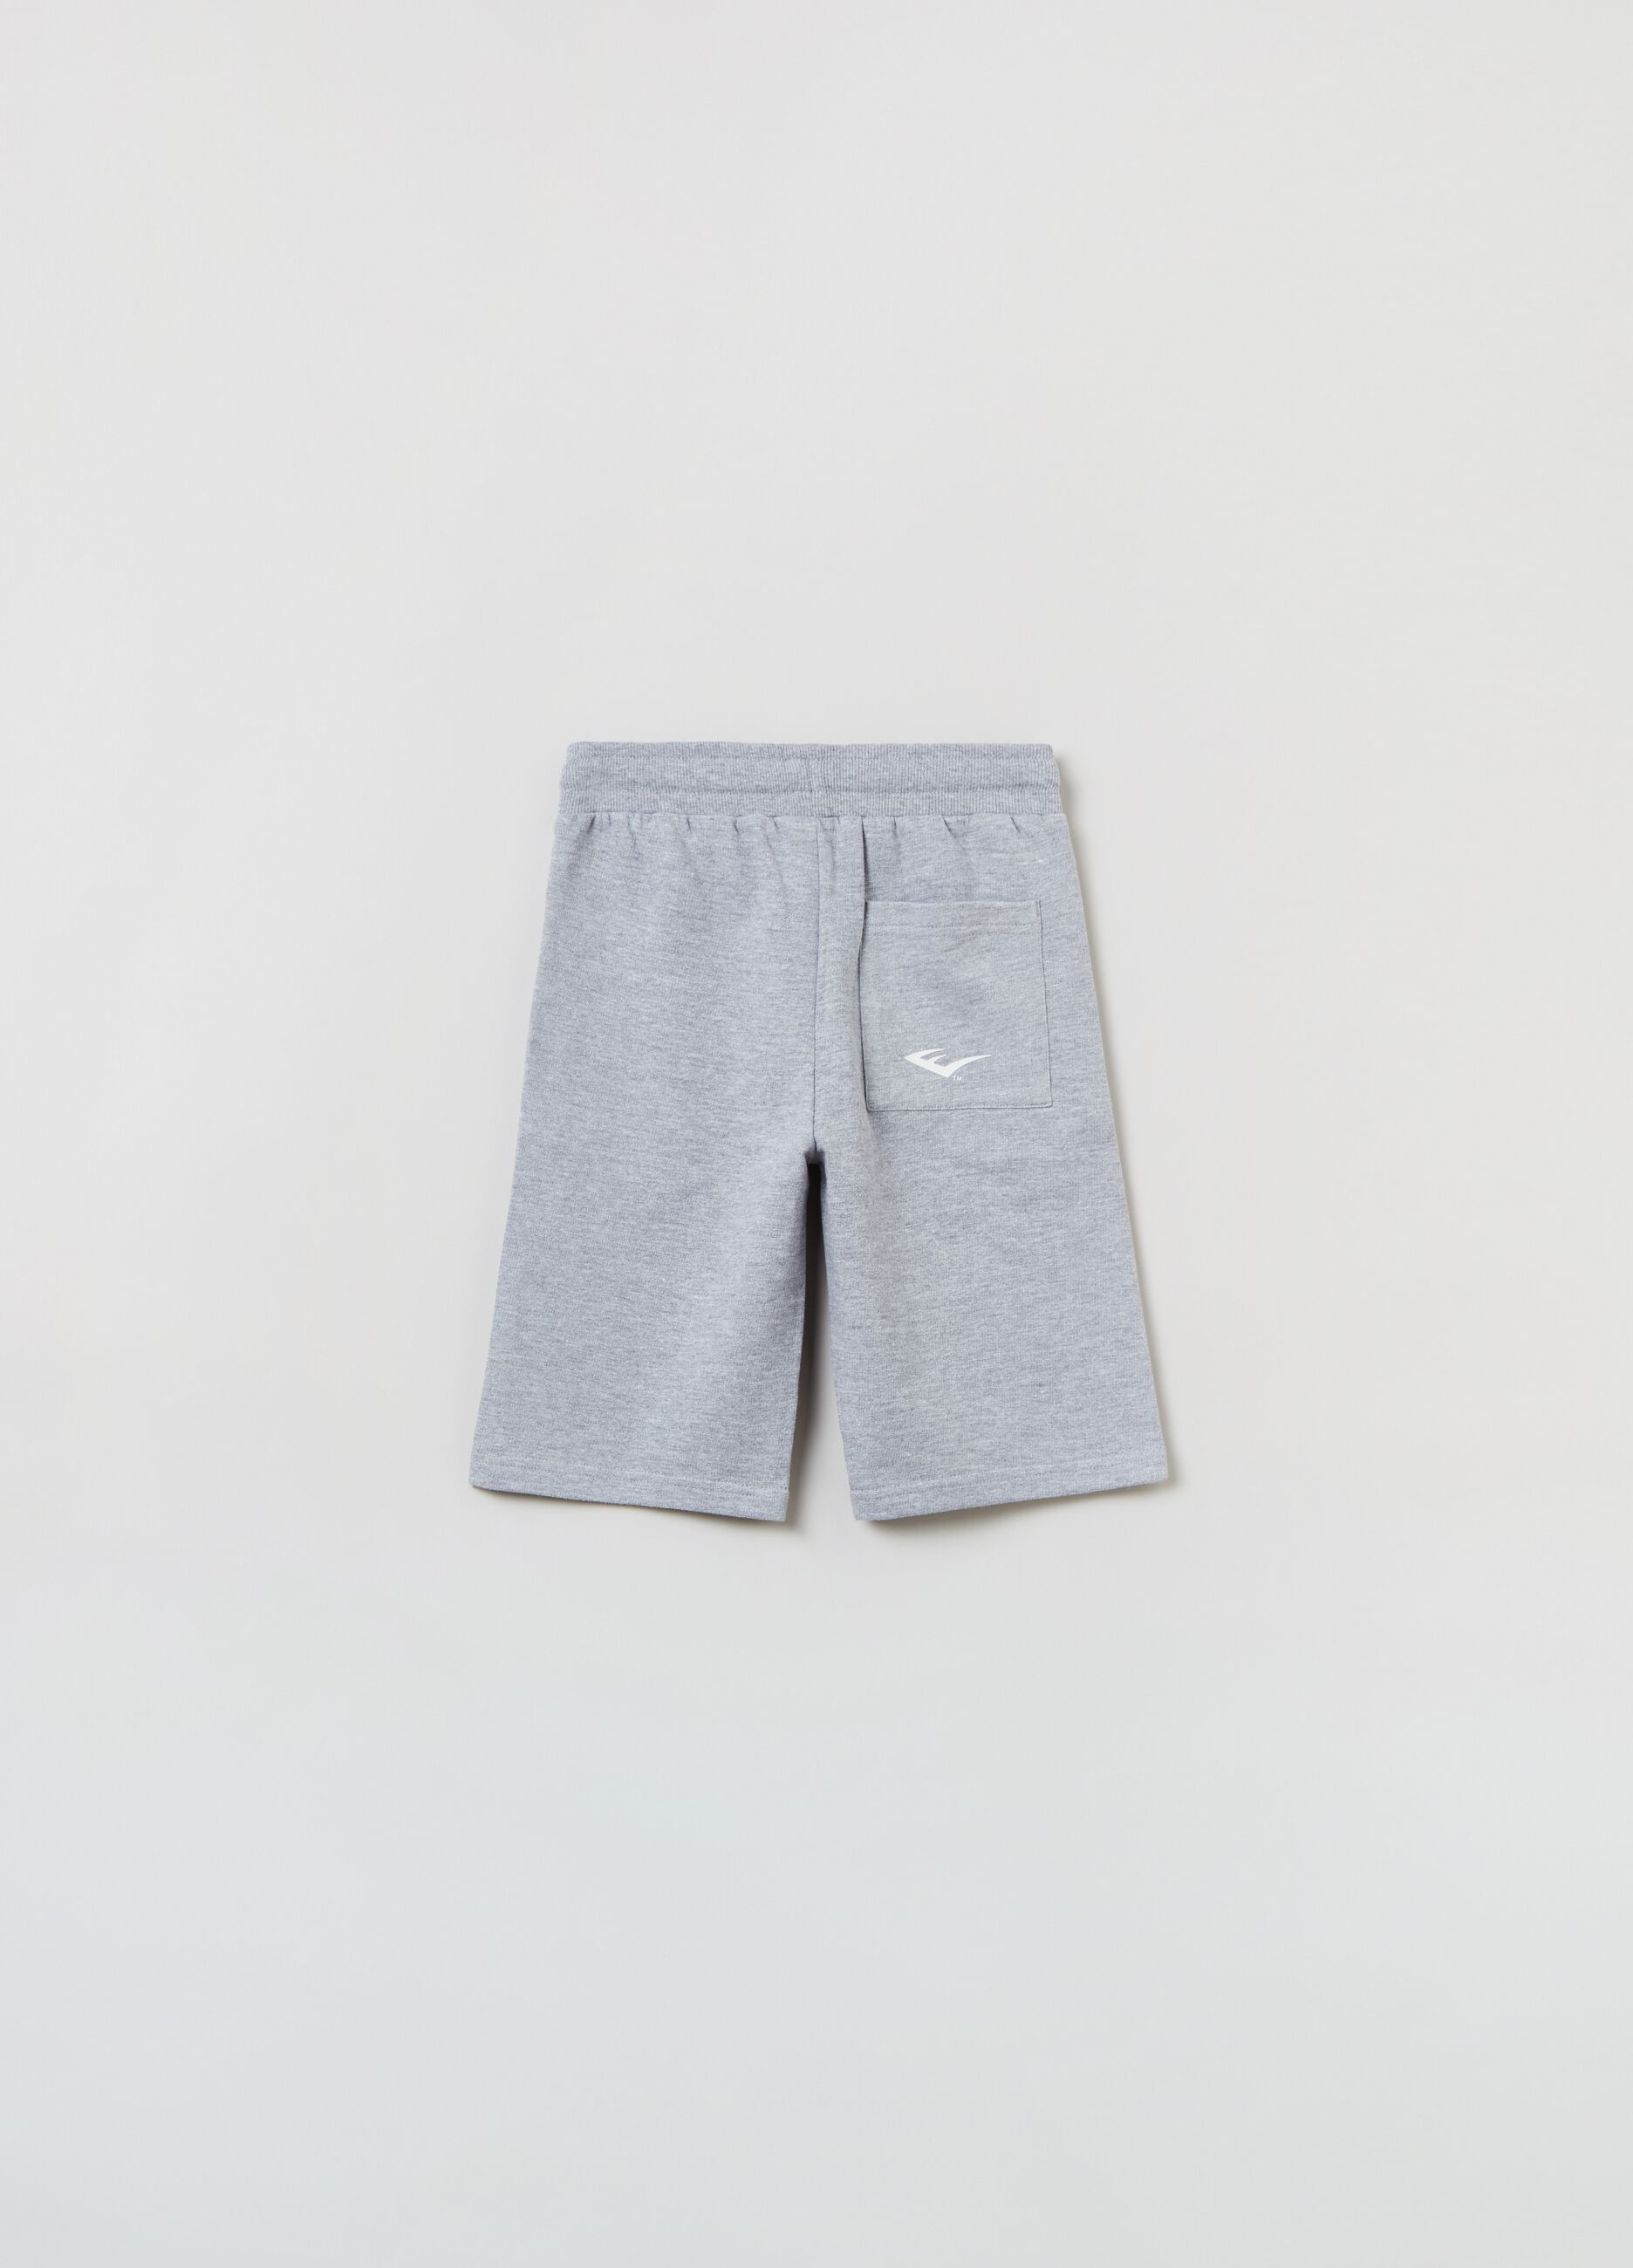 Everlast cotton Bermuda shorts with drawstring